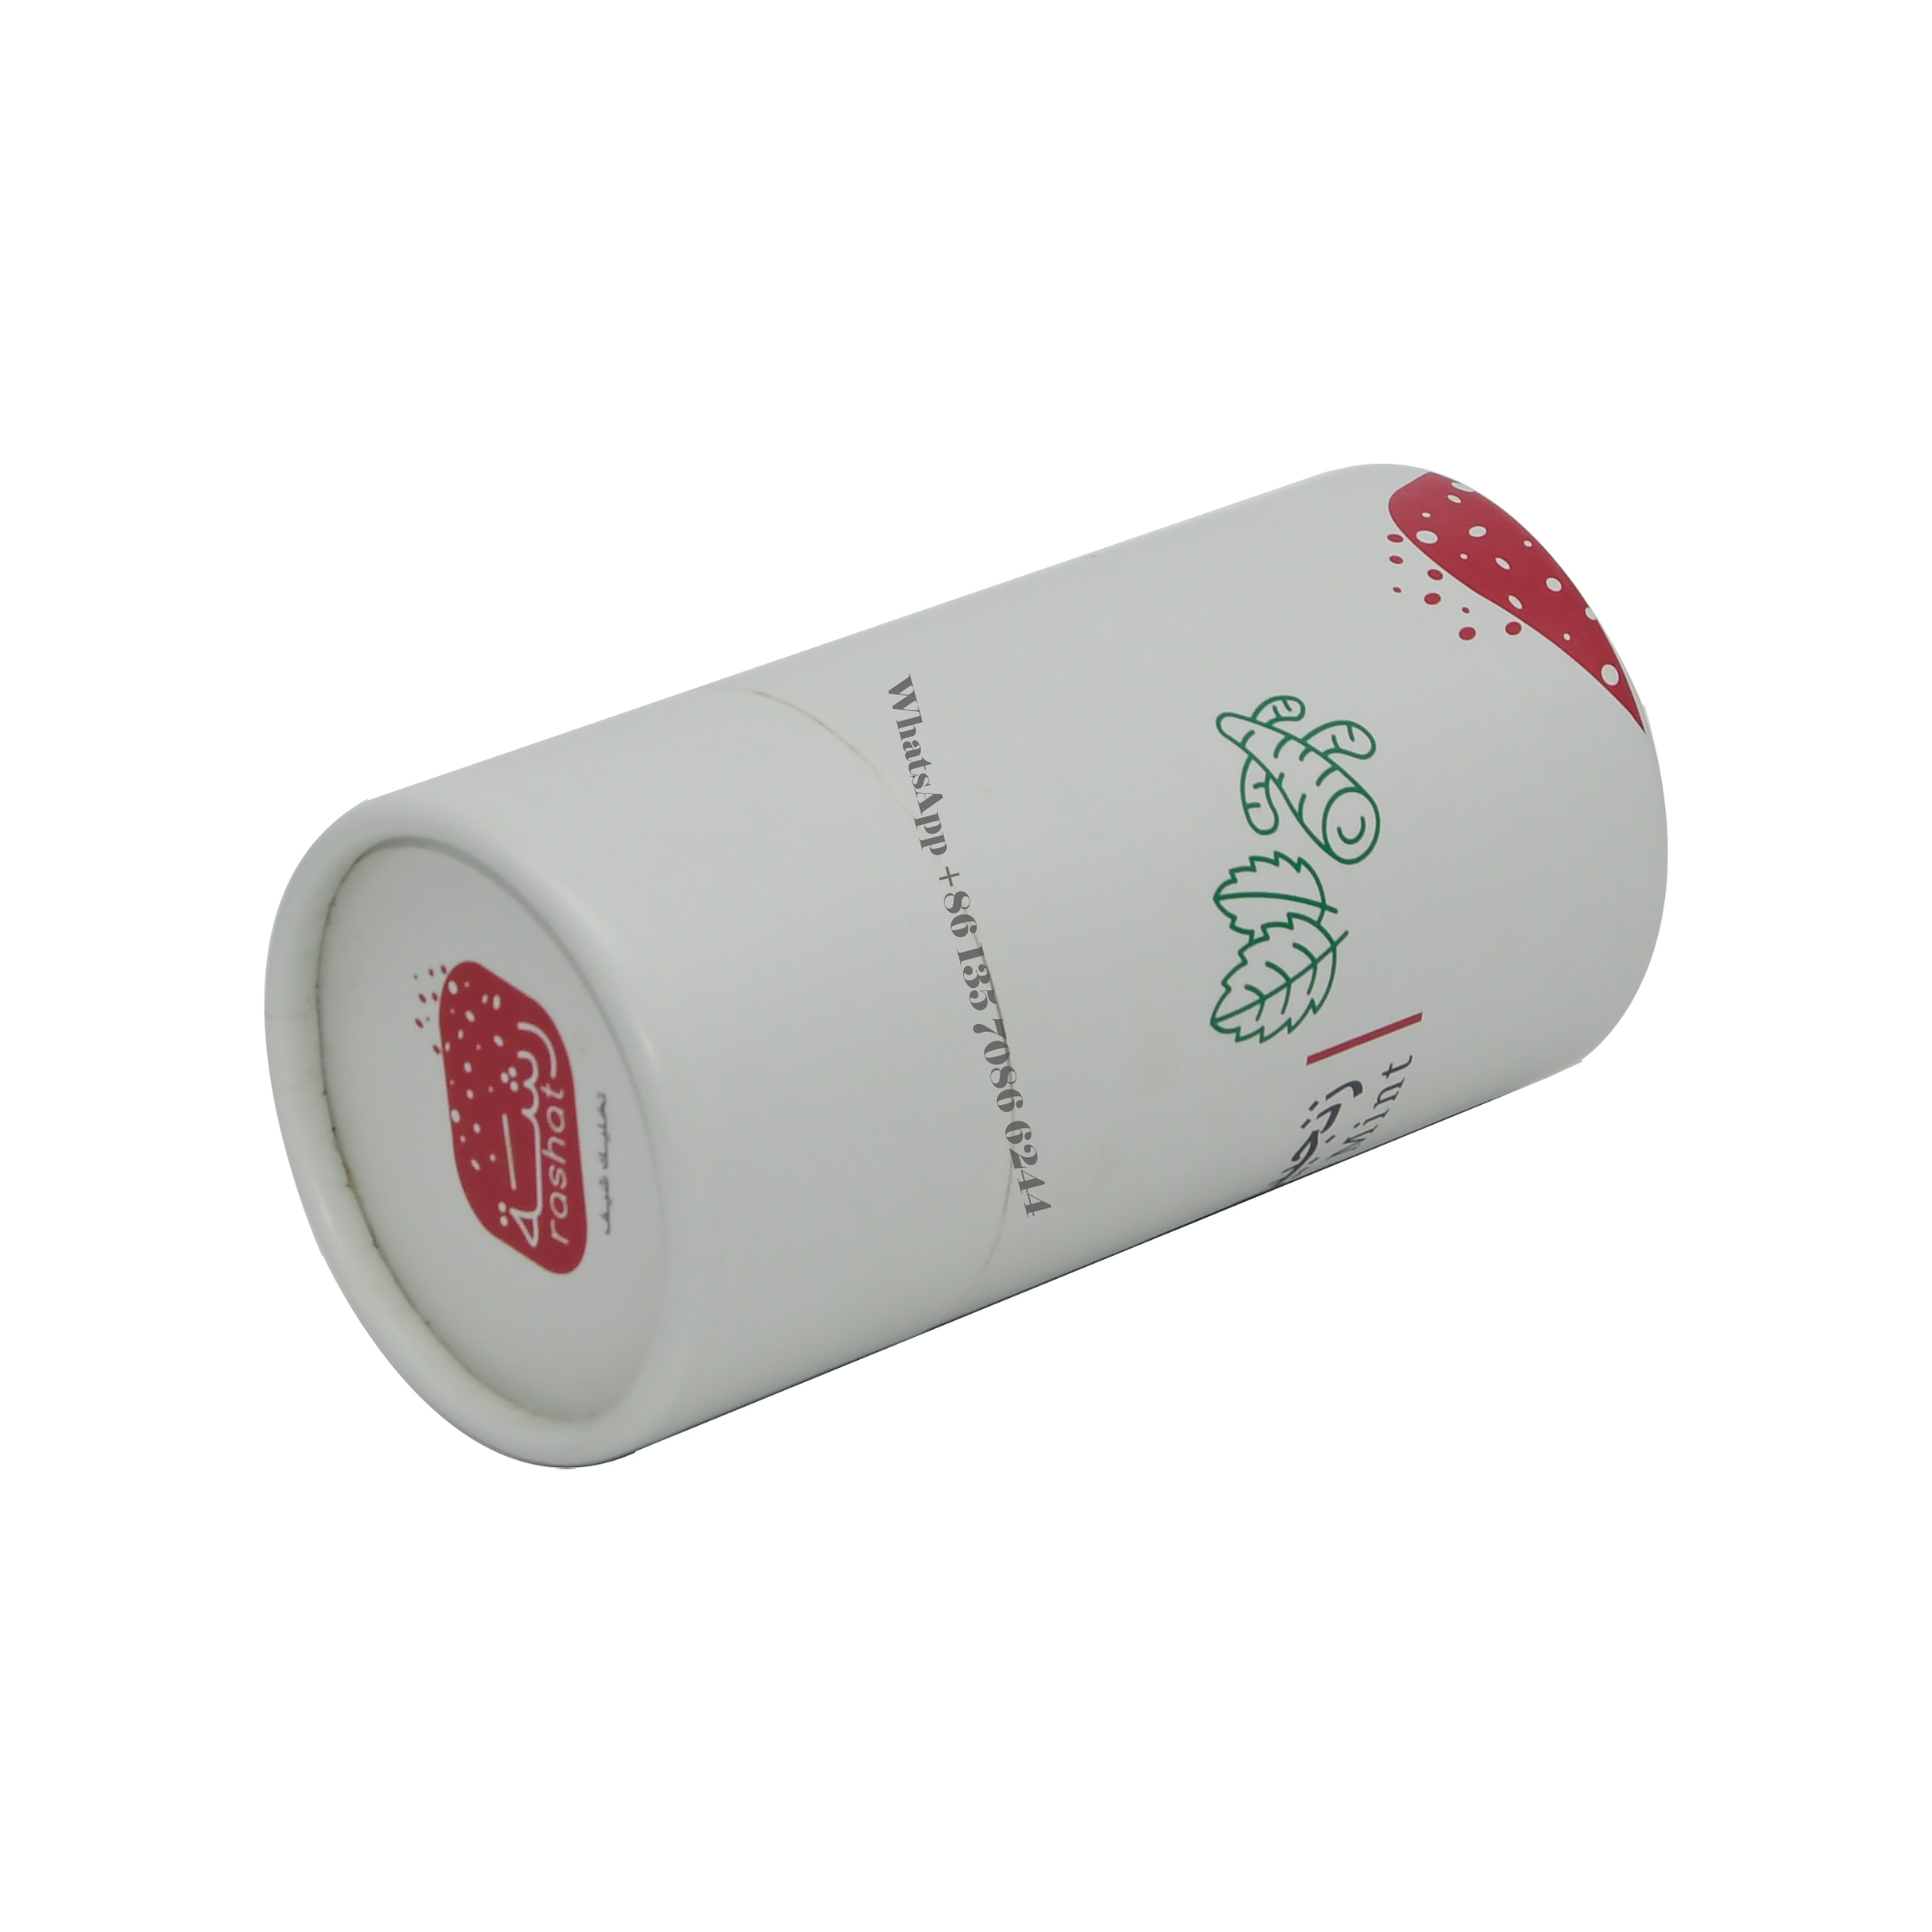  Caja de tubo de papel sellado sostenible con lámina de aluminio para envasado de té de jengibre  